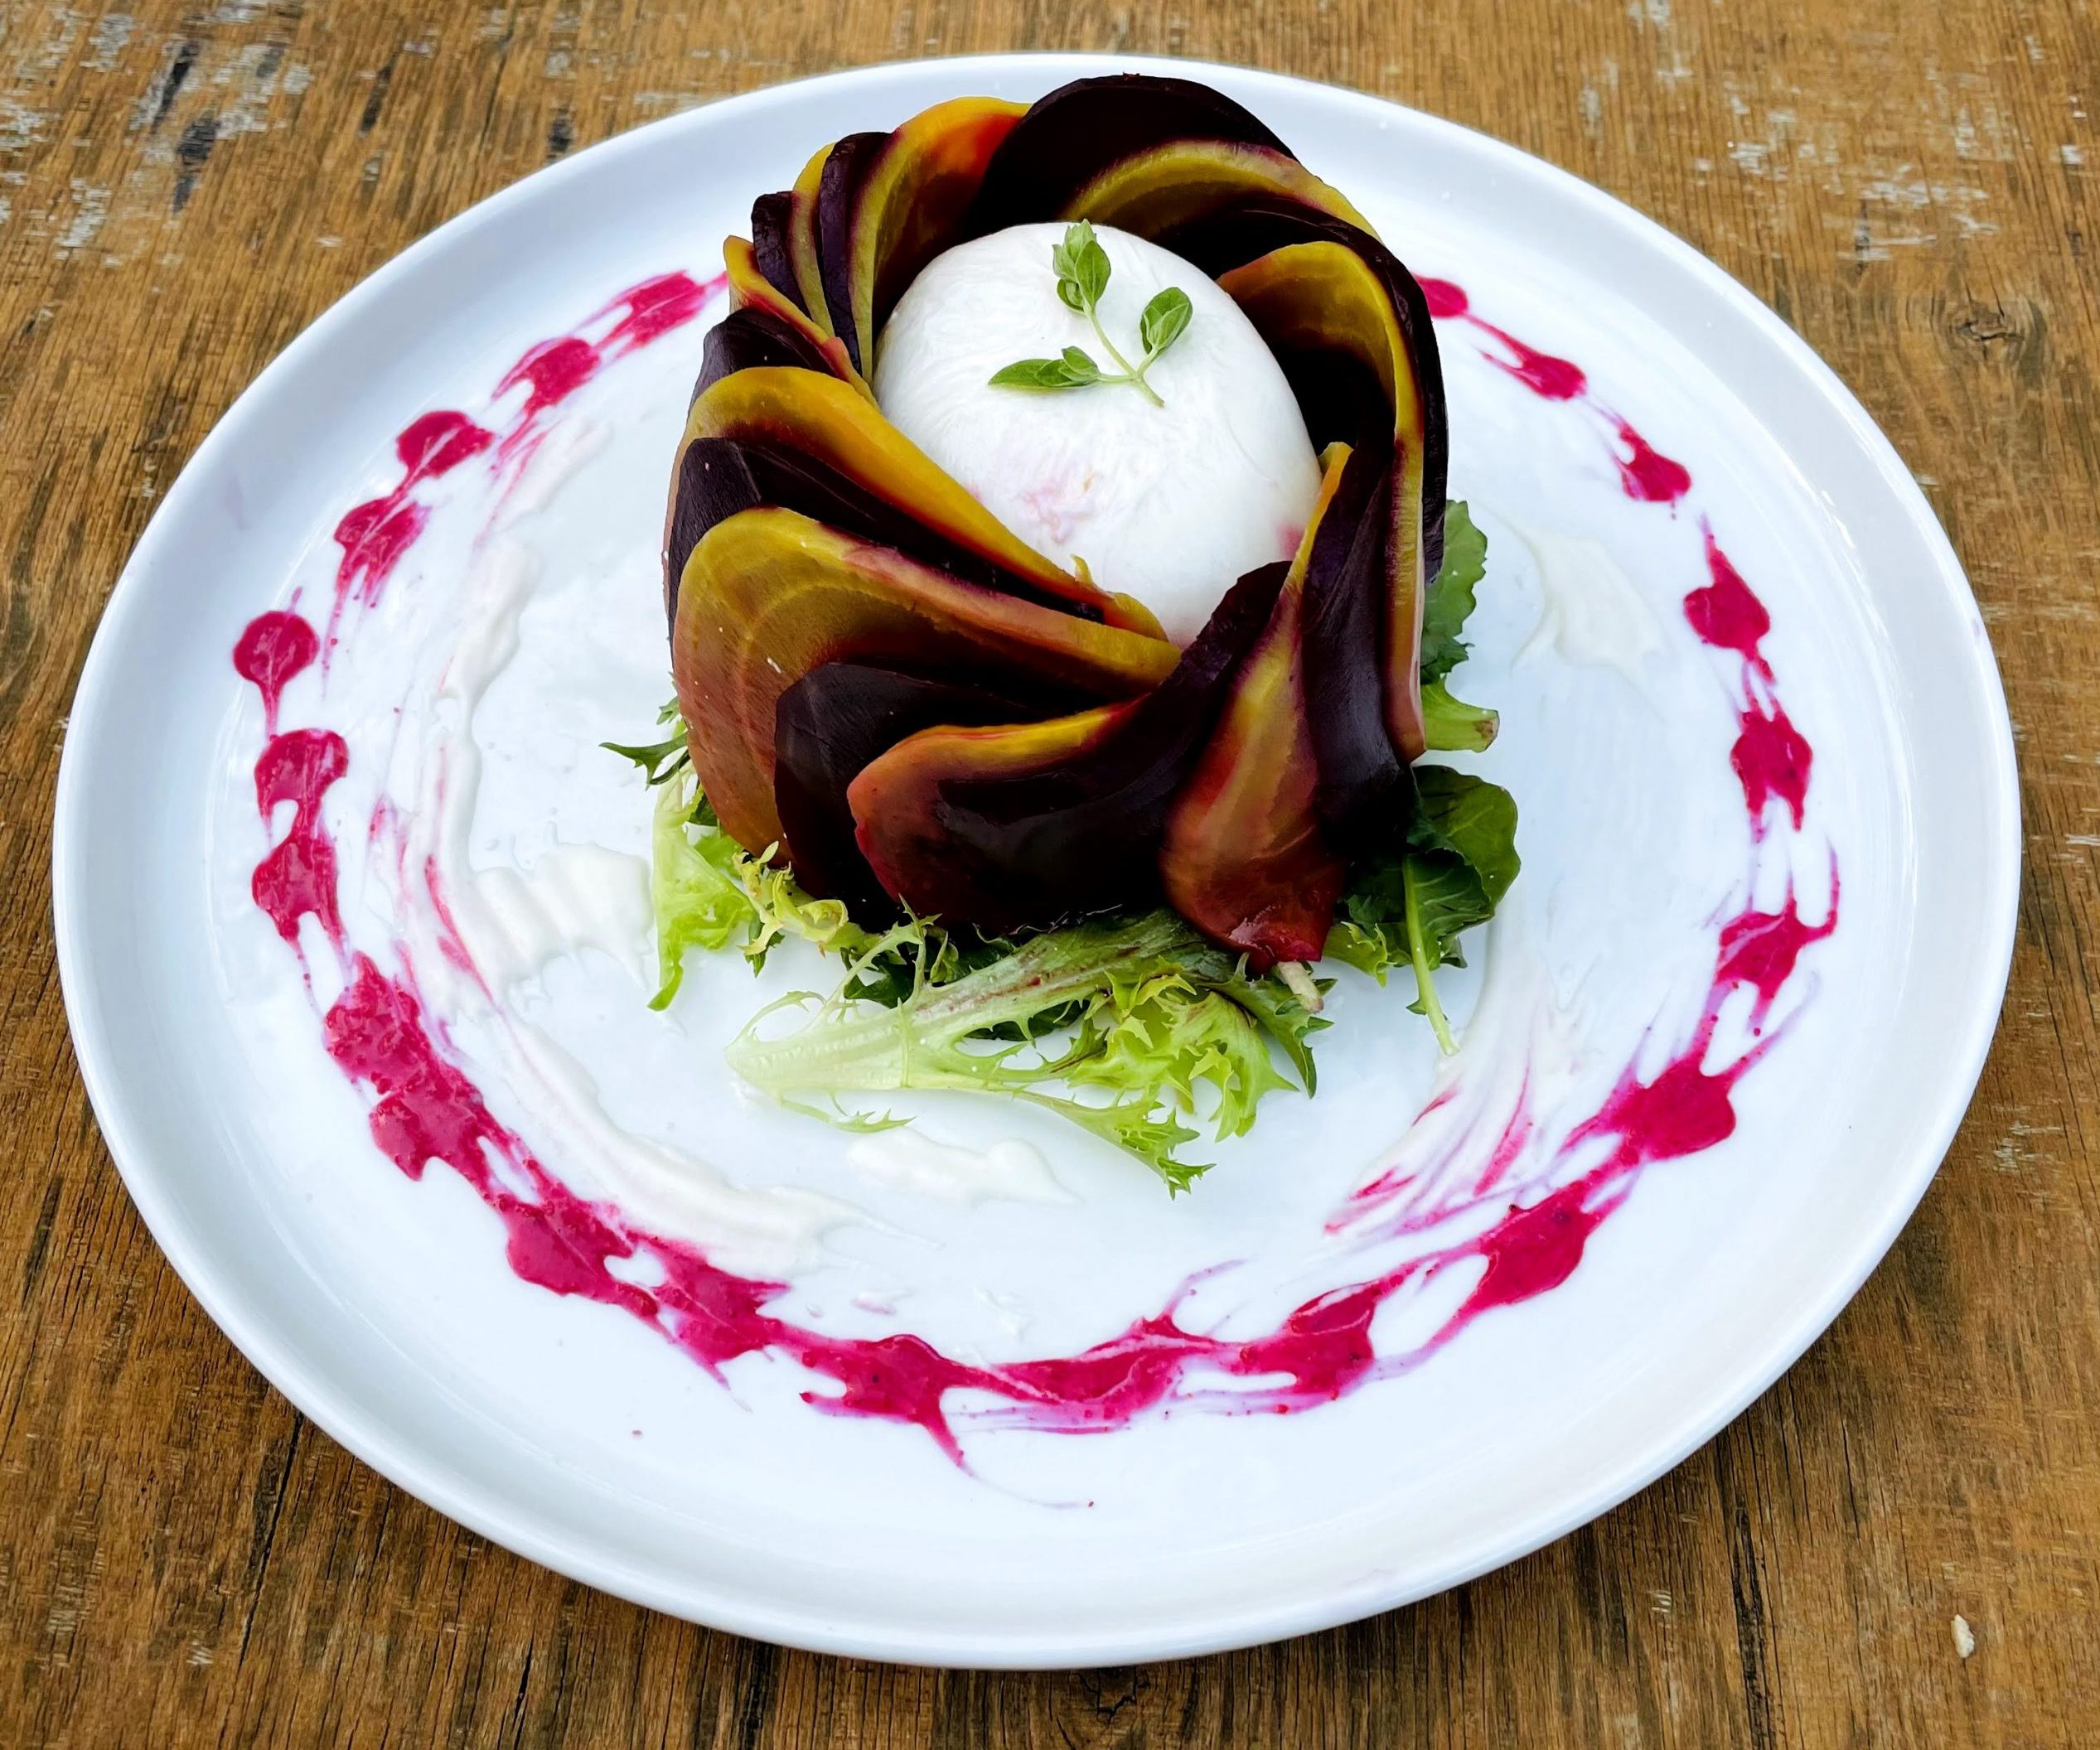 Beet burrata salad with creative flair